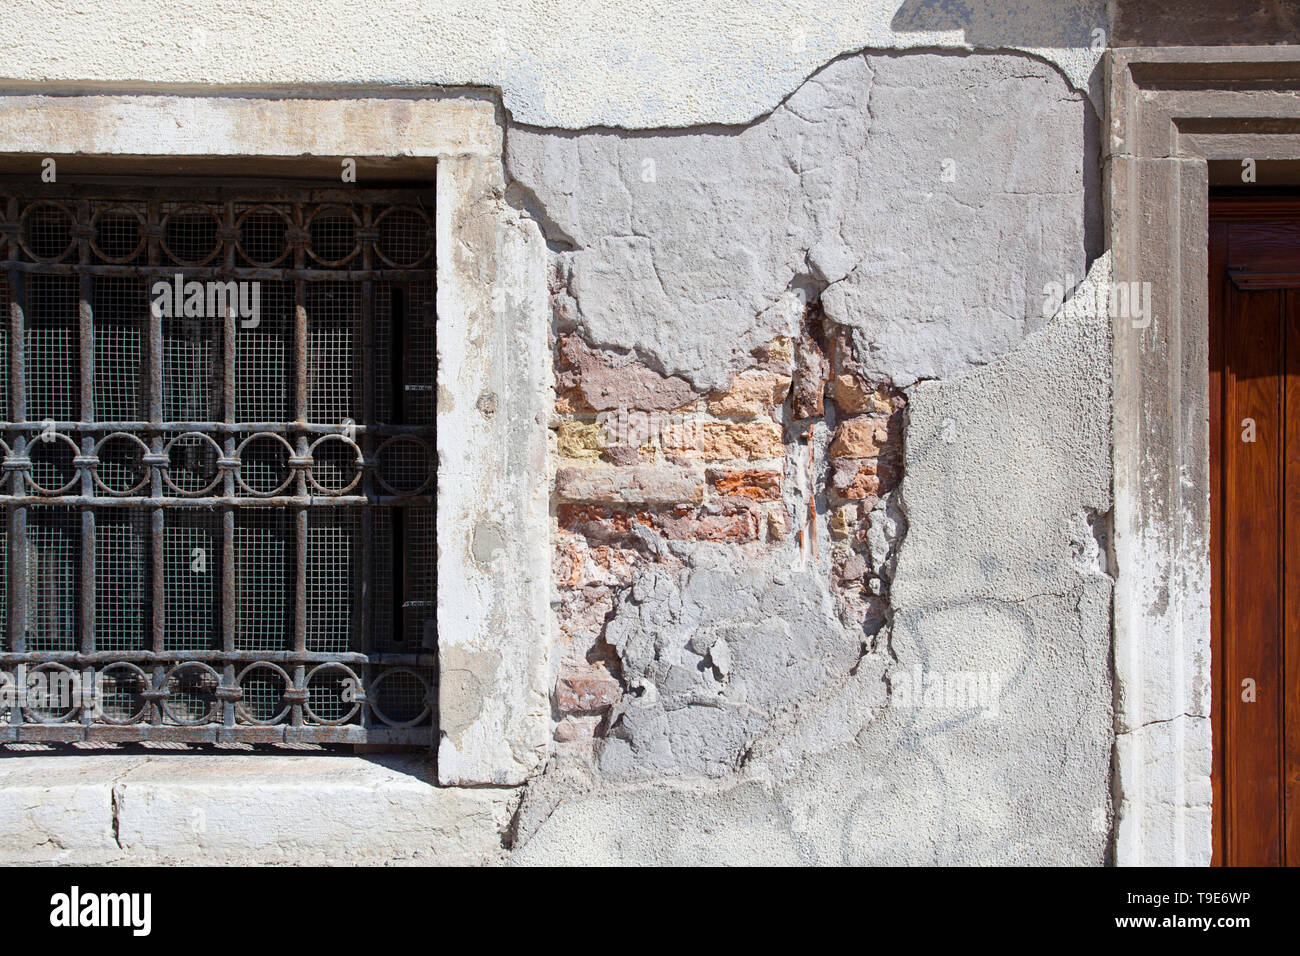 Beschädigte wand Putz abgeplatzt Fassade, Venedig, Italien Stockfoto